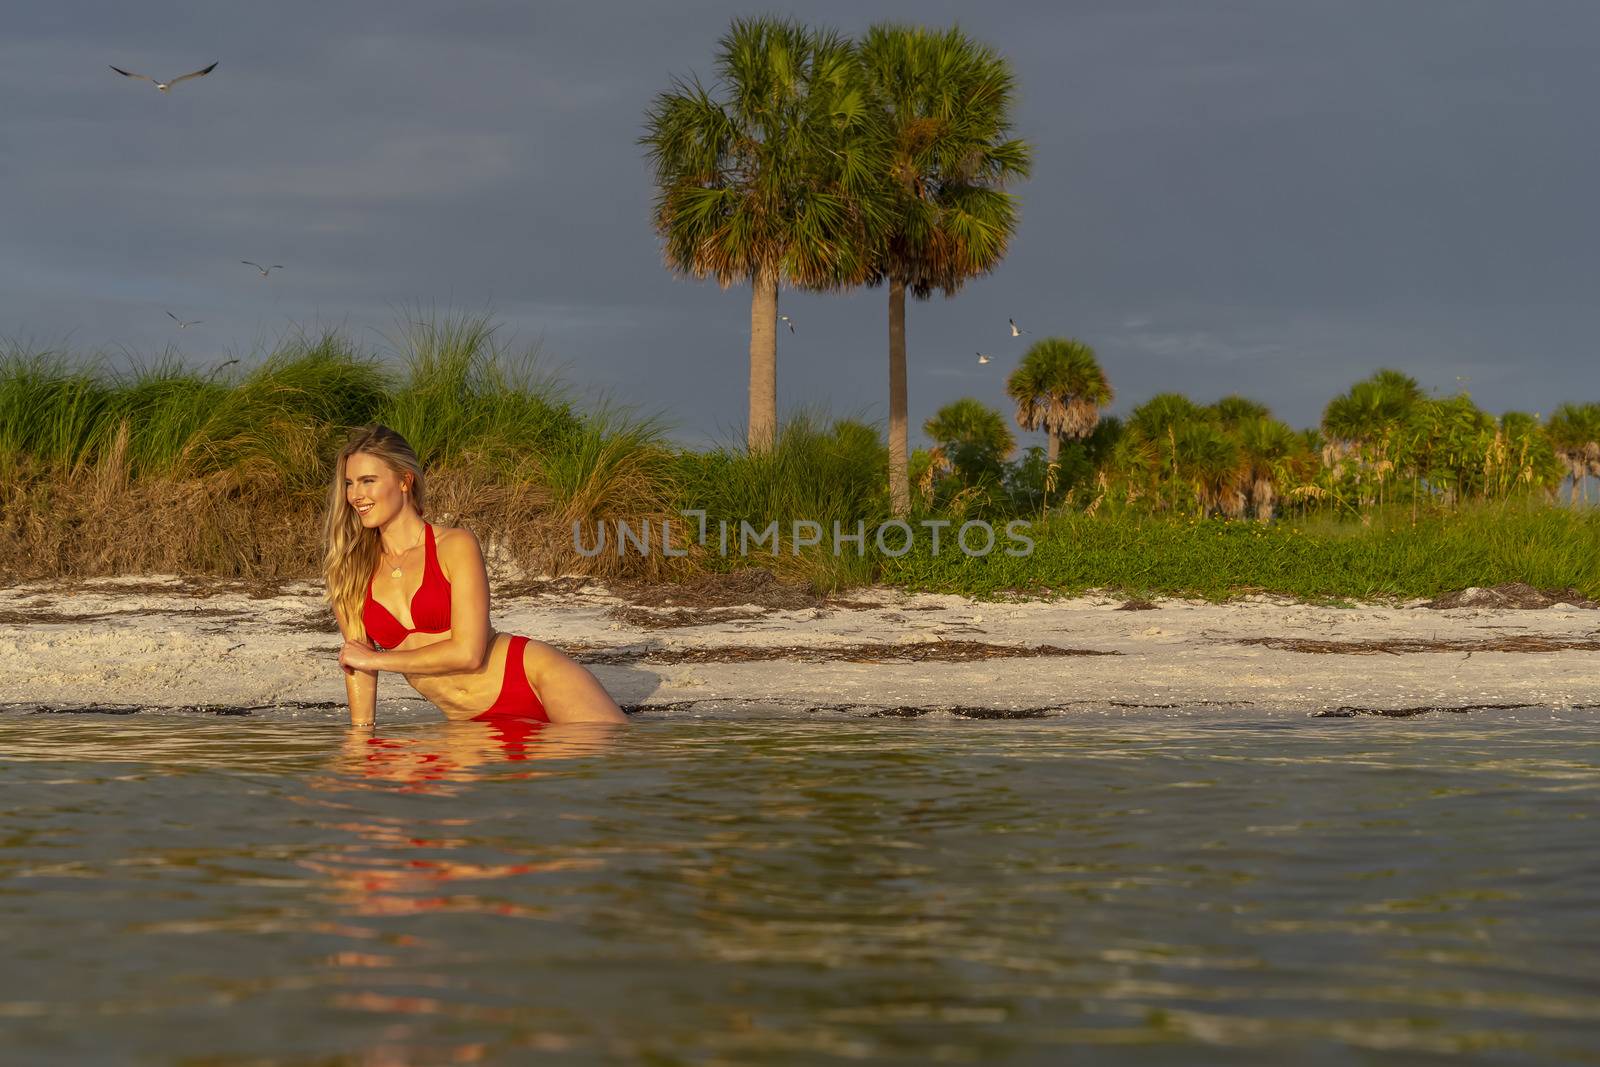 A beautiful blonde bikini model enjoys the weather outdoors on the beach